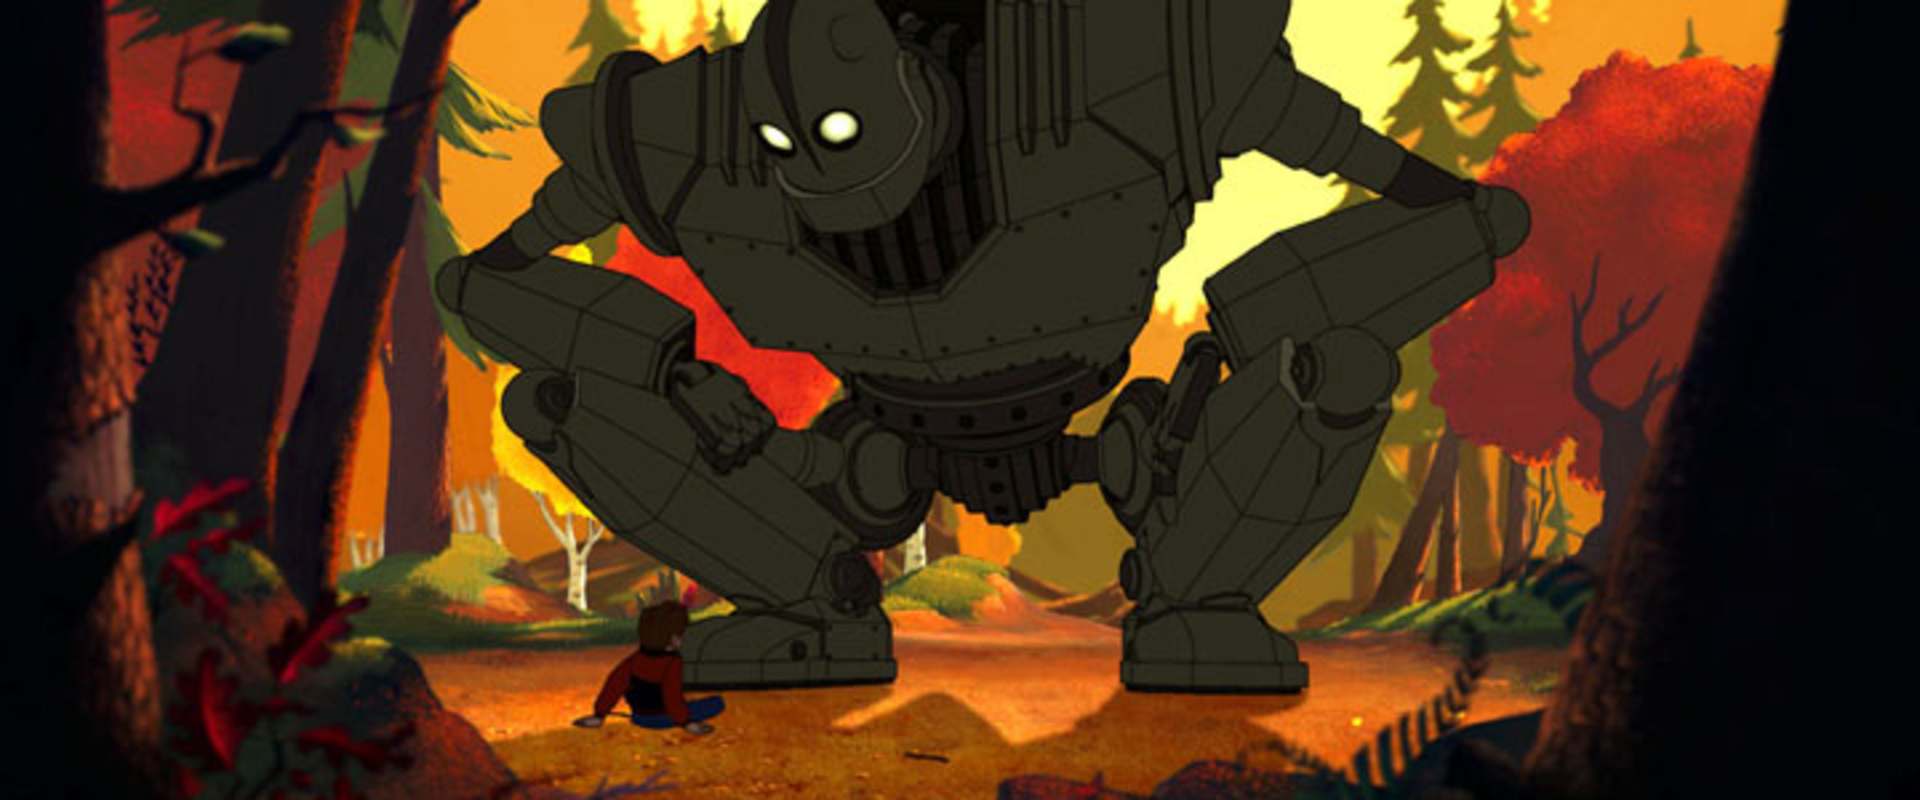 The Iron Giant background 2